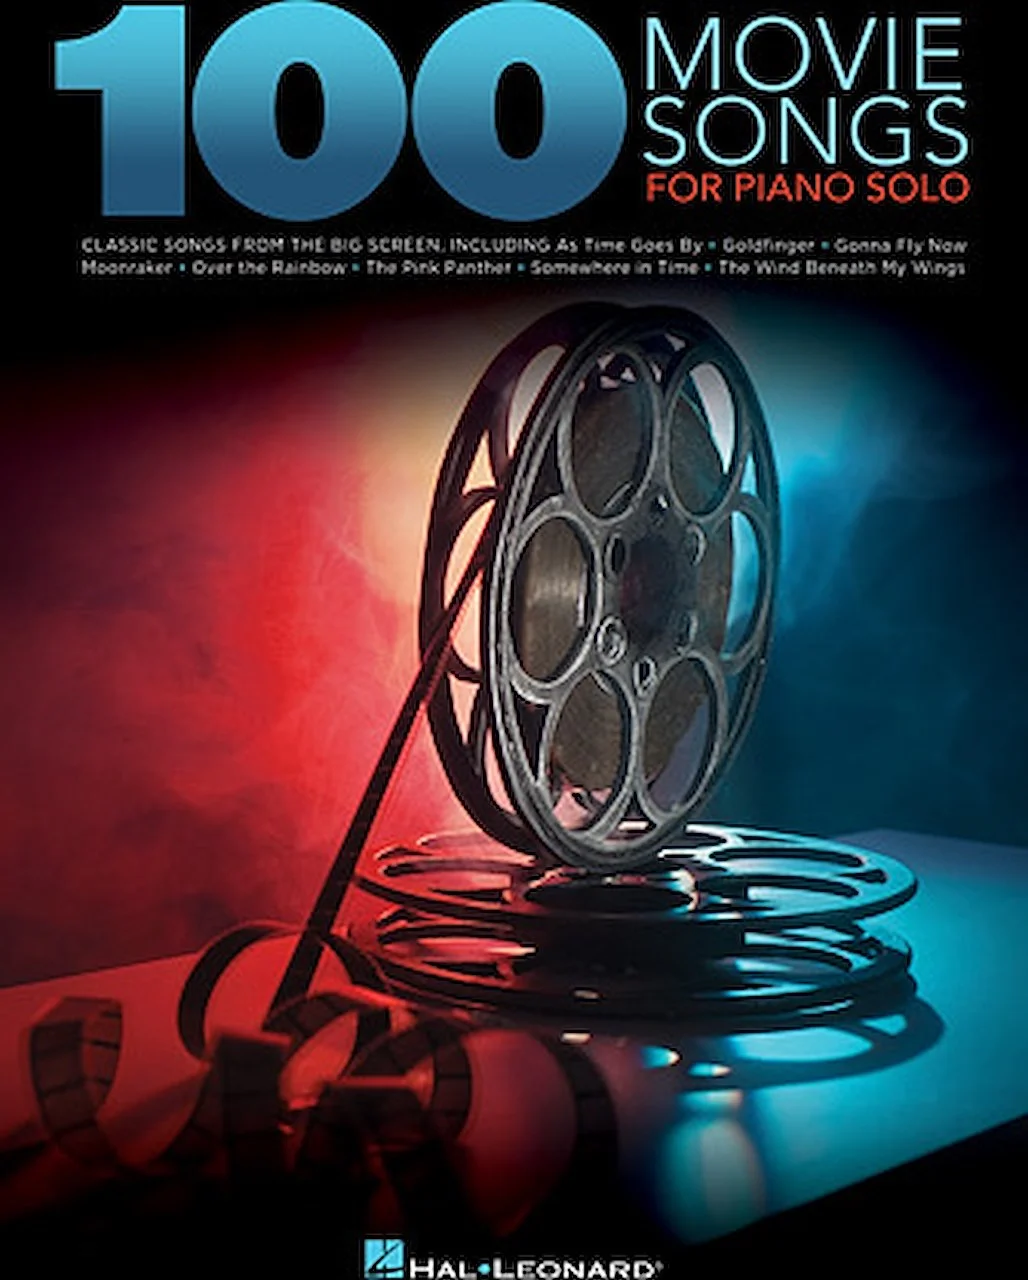 100 Movie Songs for Piano Solo 884088676681 | eBay